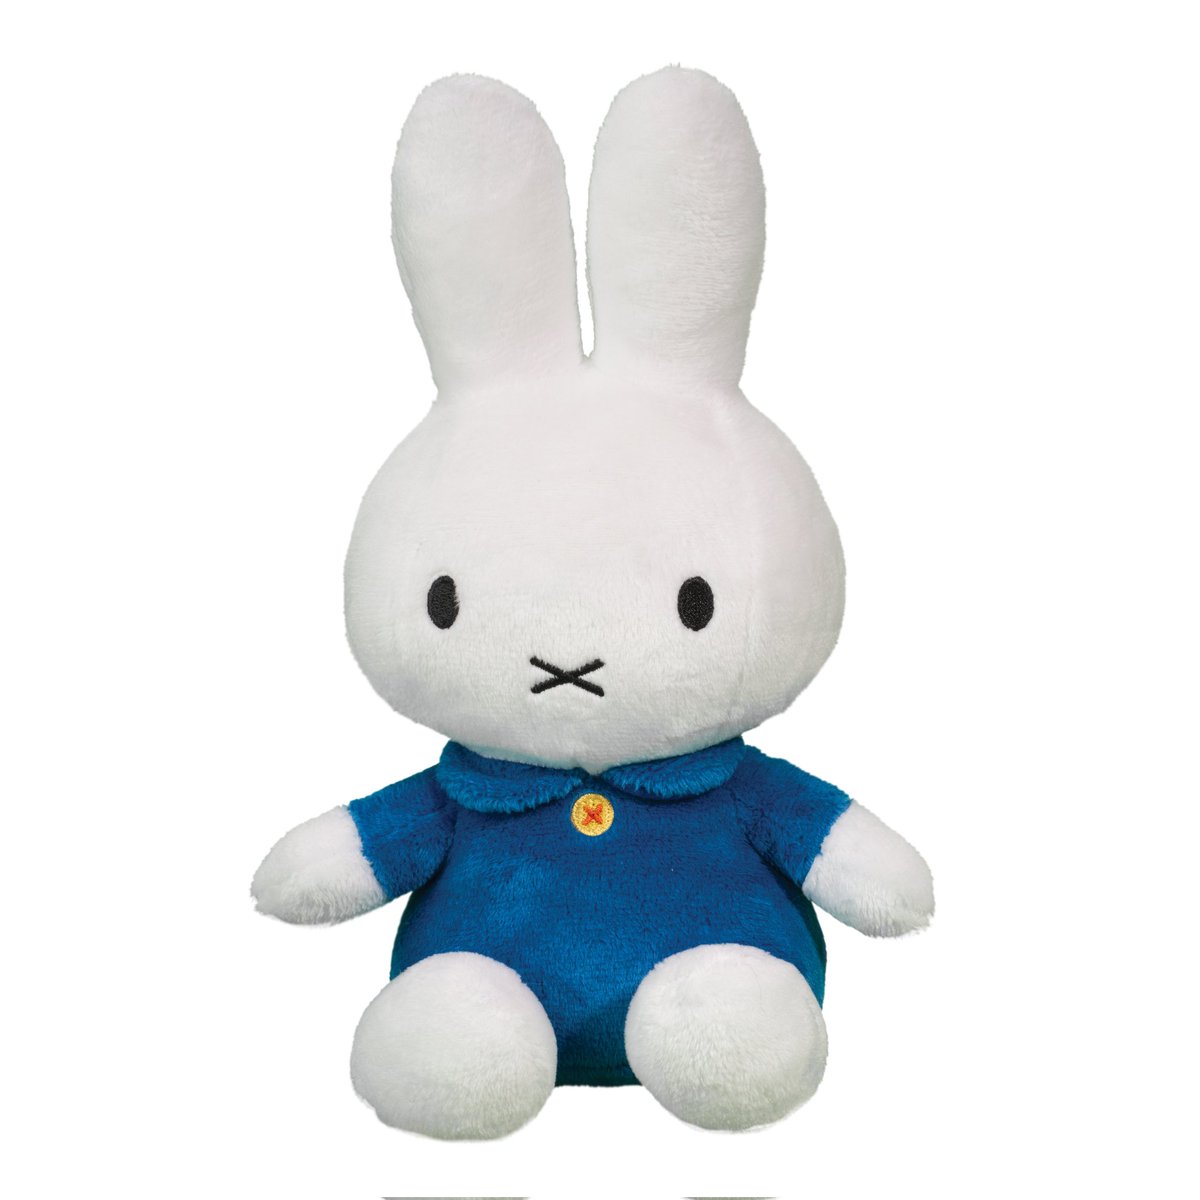 no humans white background simple background rabbit stuffed toy solo stuffed animal  illustration images